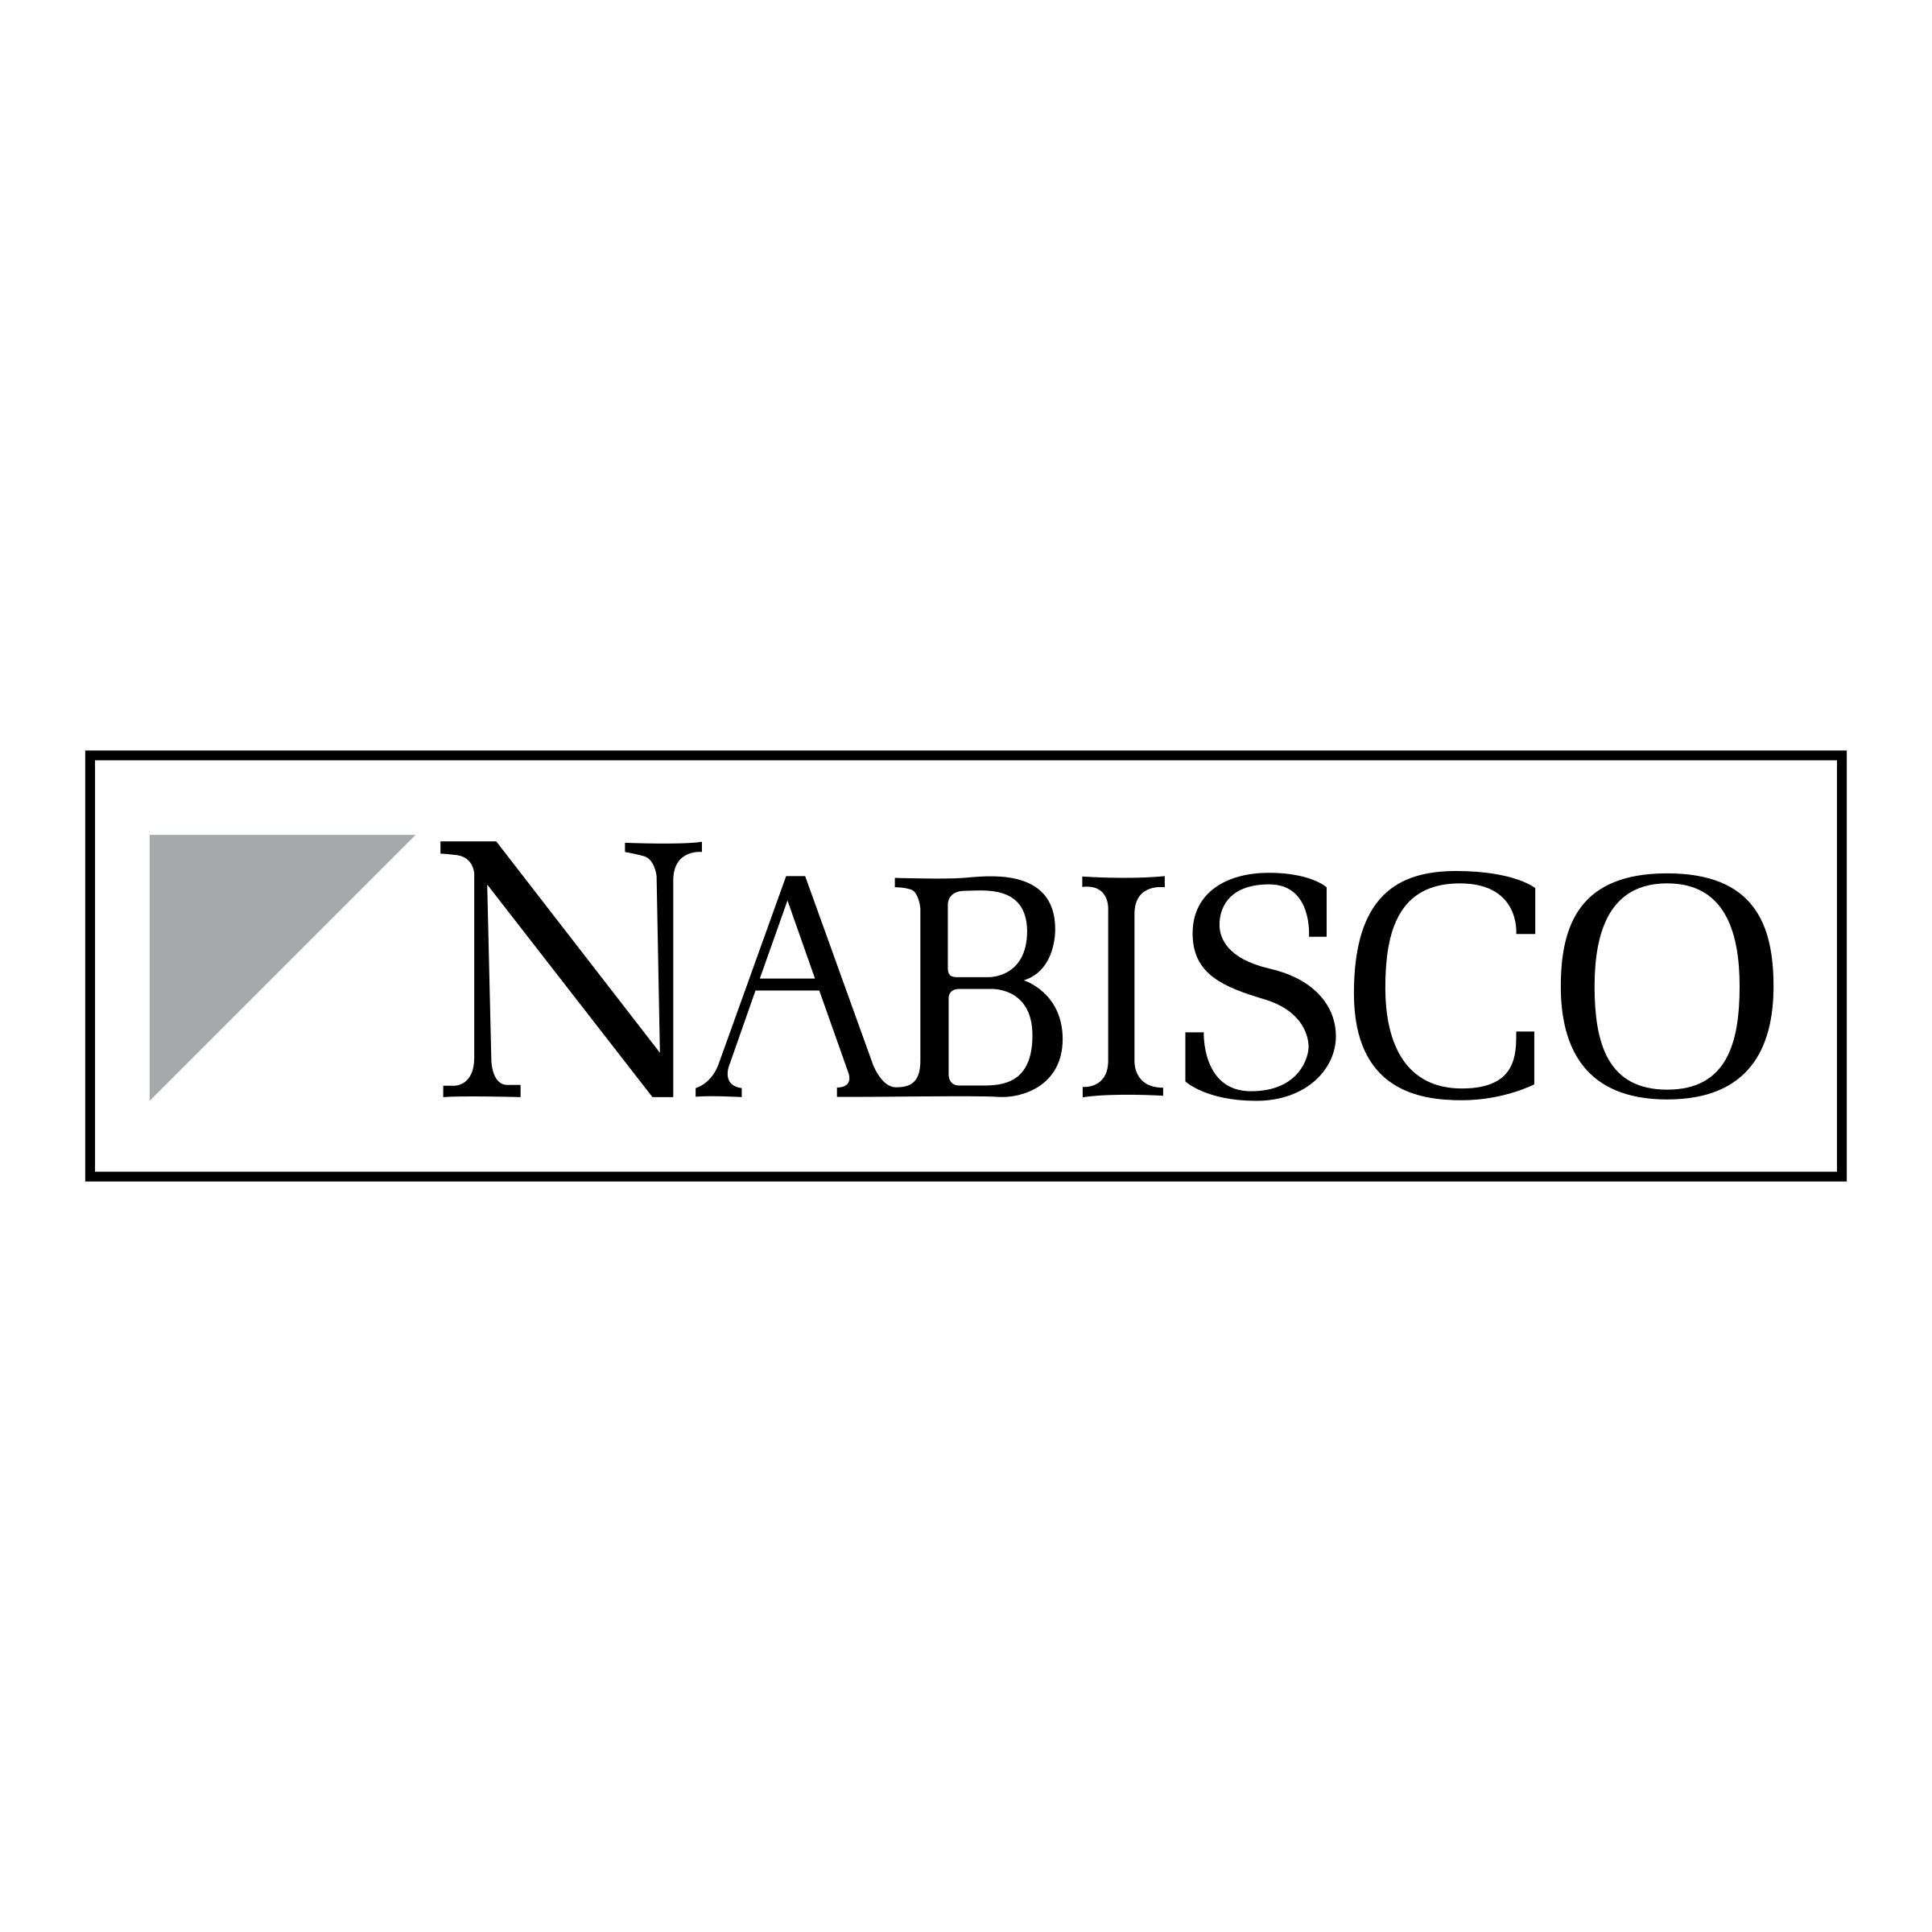 Nabisco Logo - Nabisco Logo PNG Transparent & SVG Vector - Freebie Supply